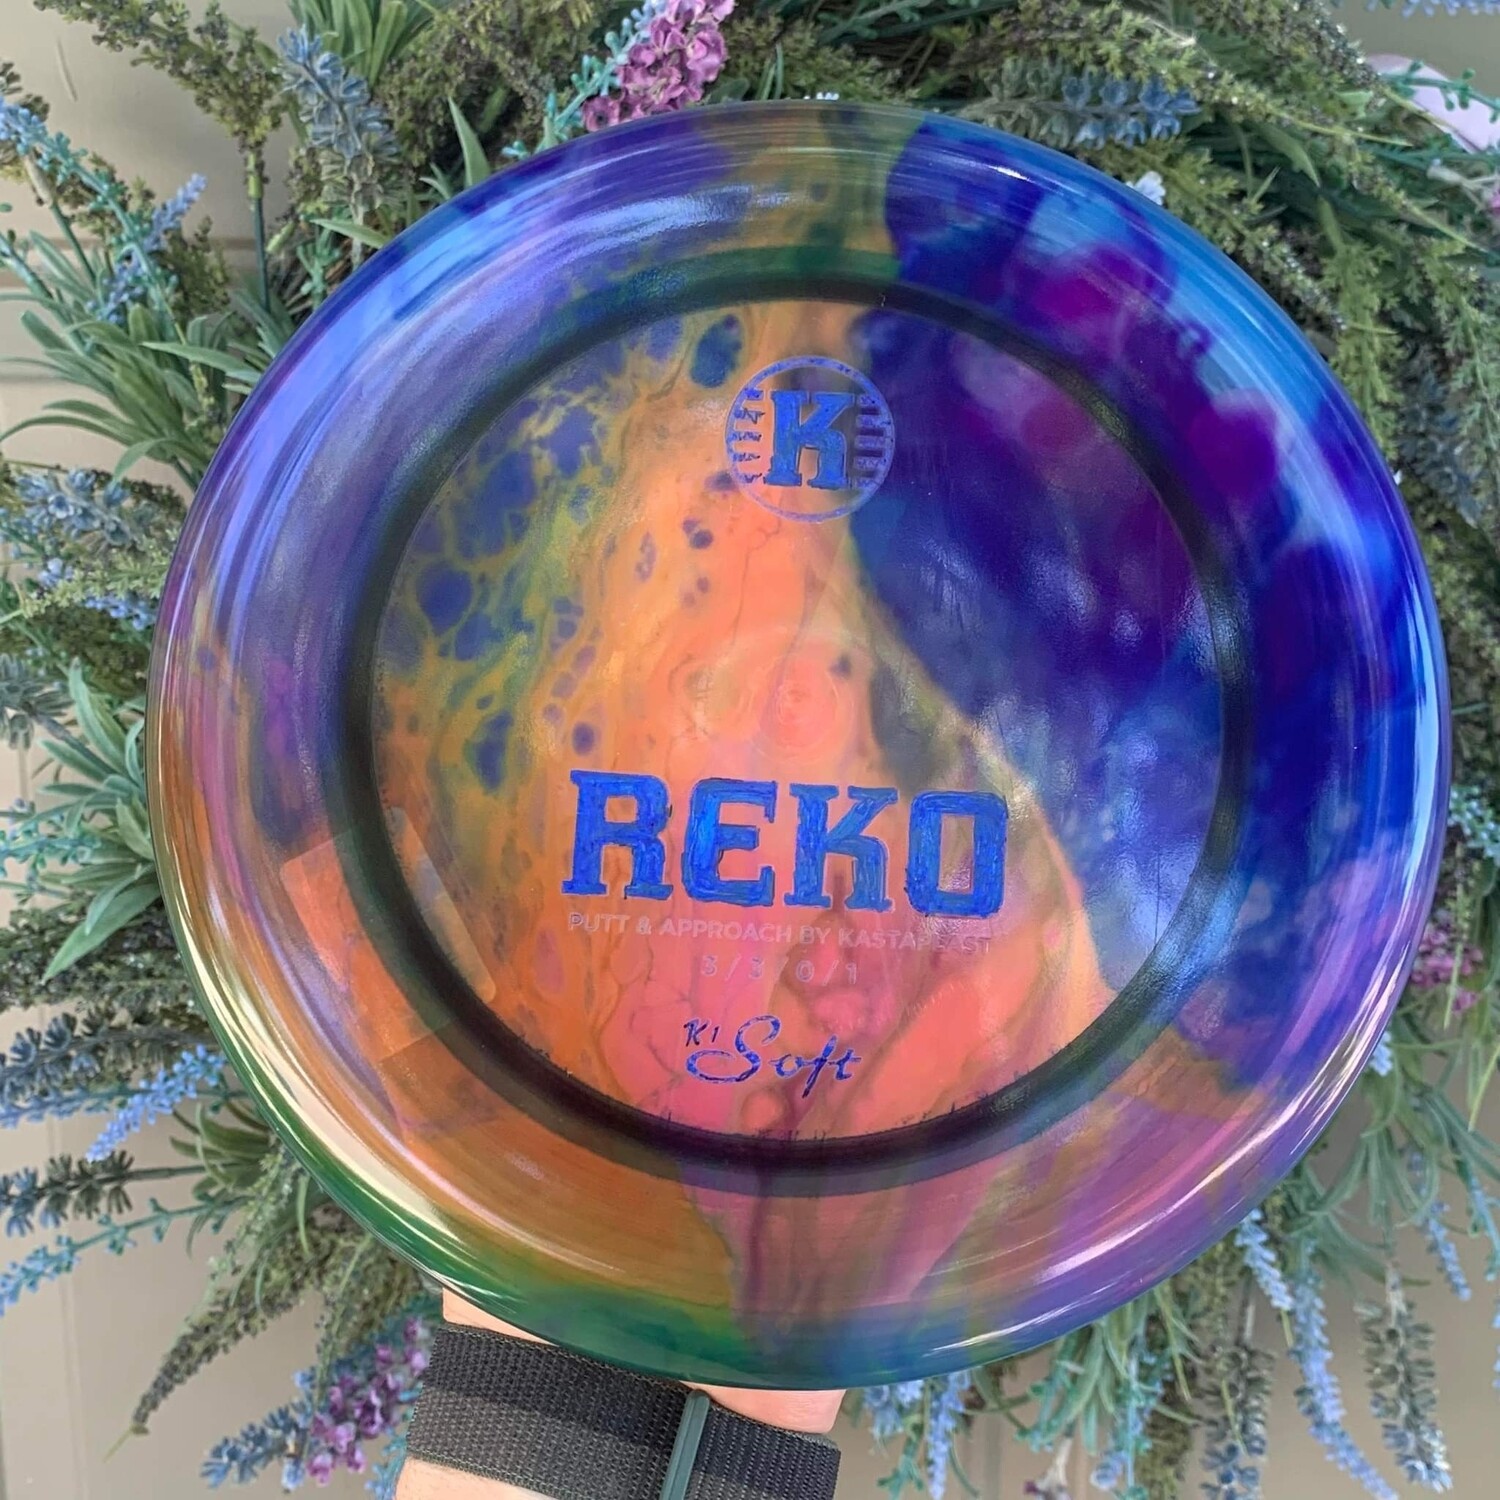 Kasterplast Reko K1 Soft. Free Shipping!